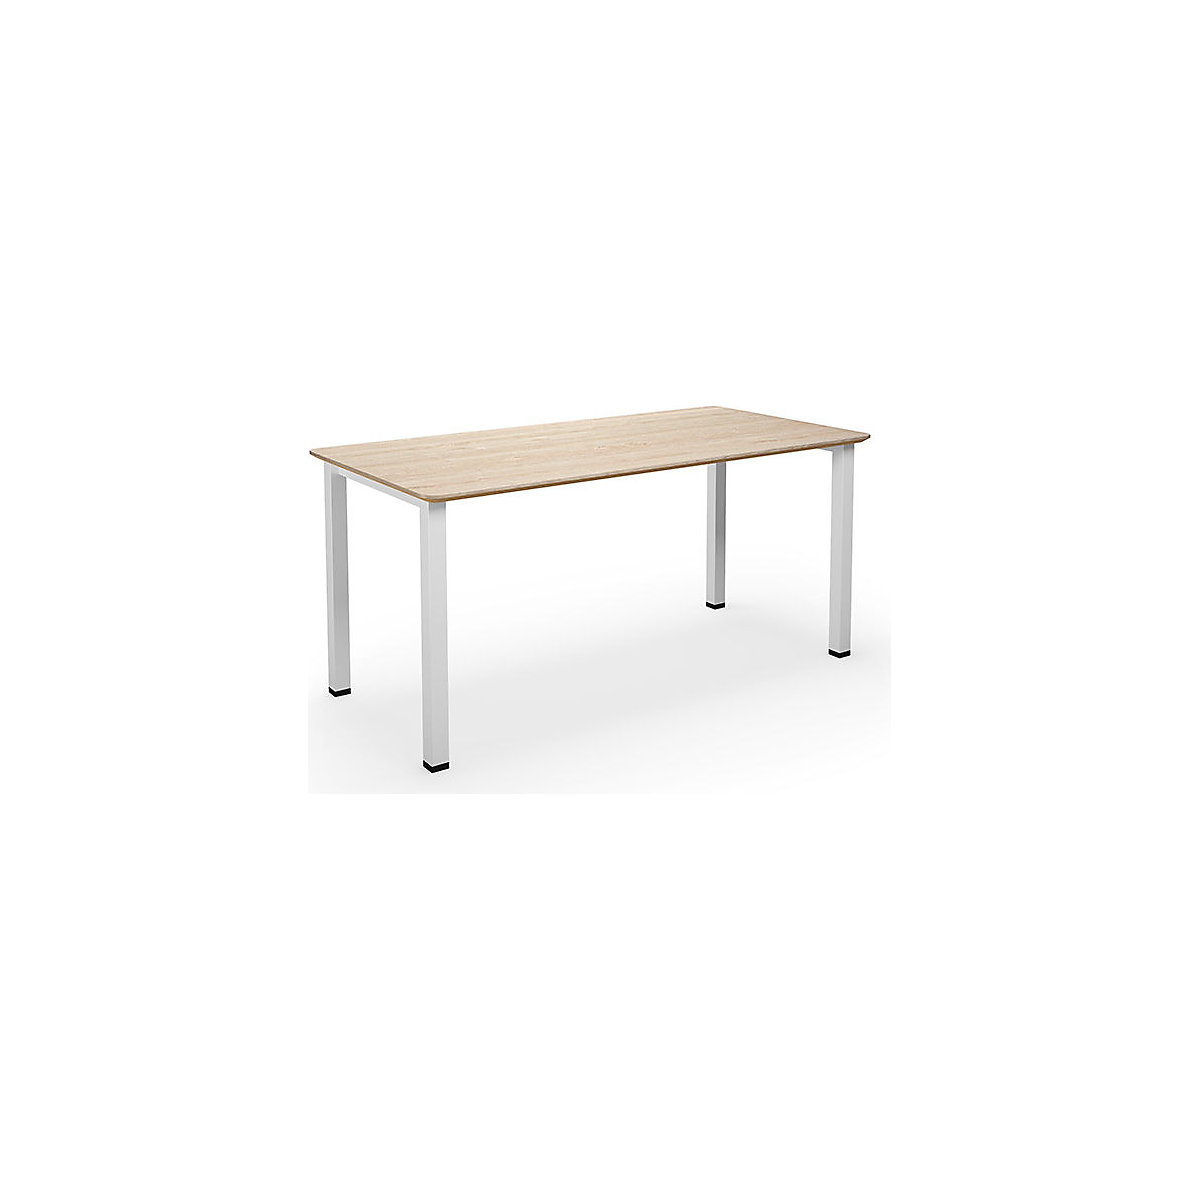 DUO-U Trend multi-purpose desk, straight tabletop, rounded corners